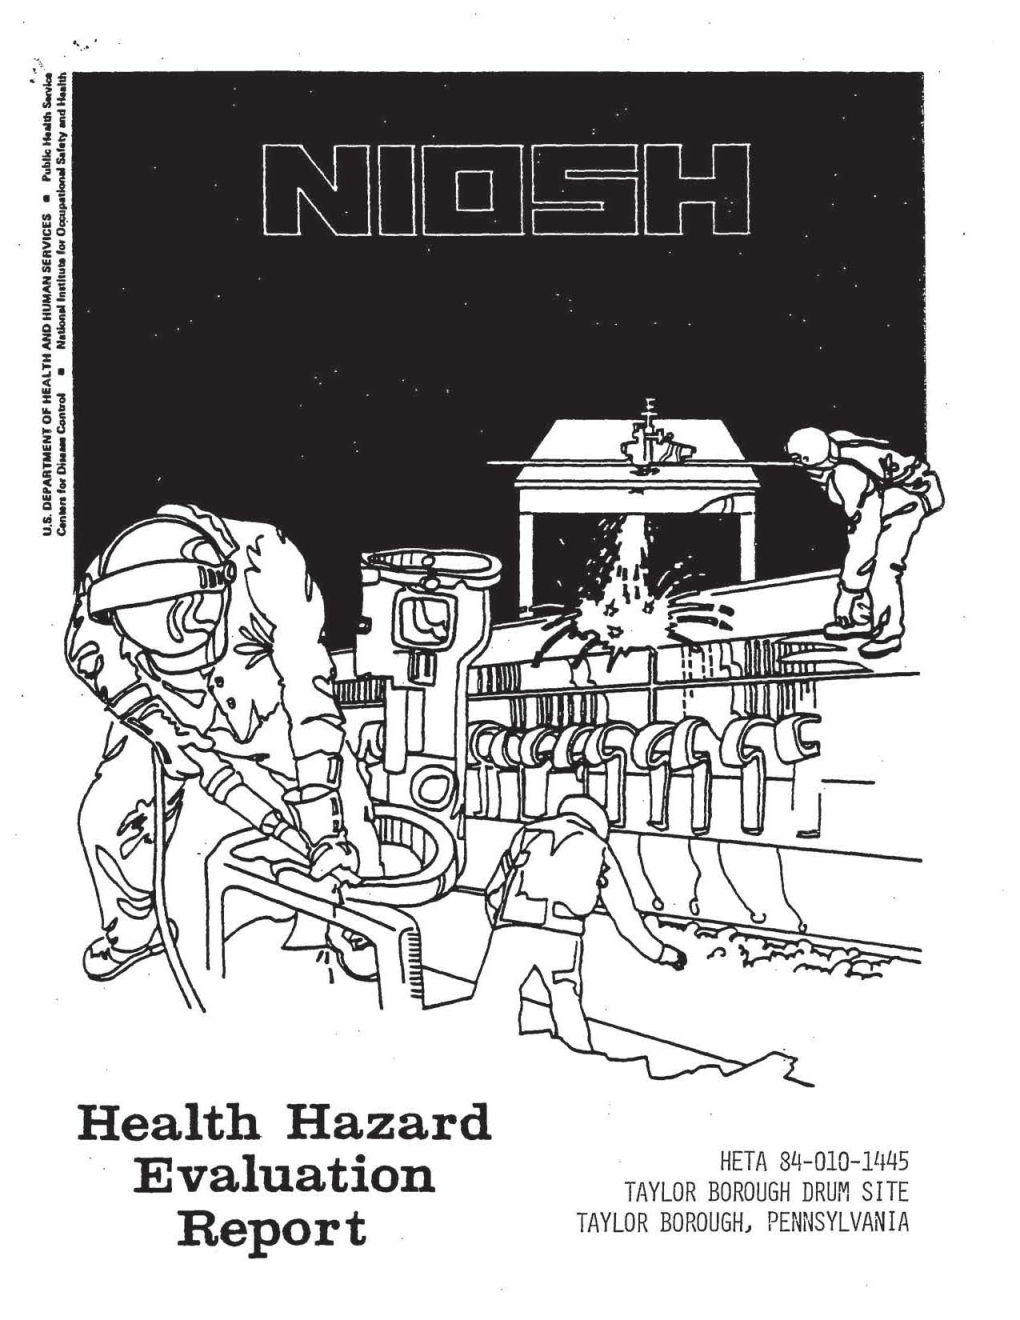 Health Hazard Evaluation Report 1984-010-1445